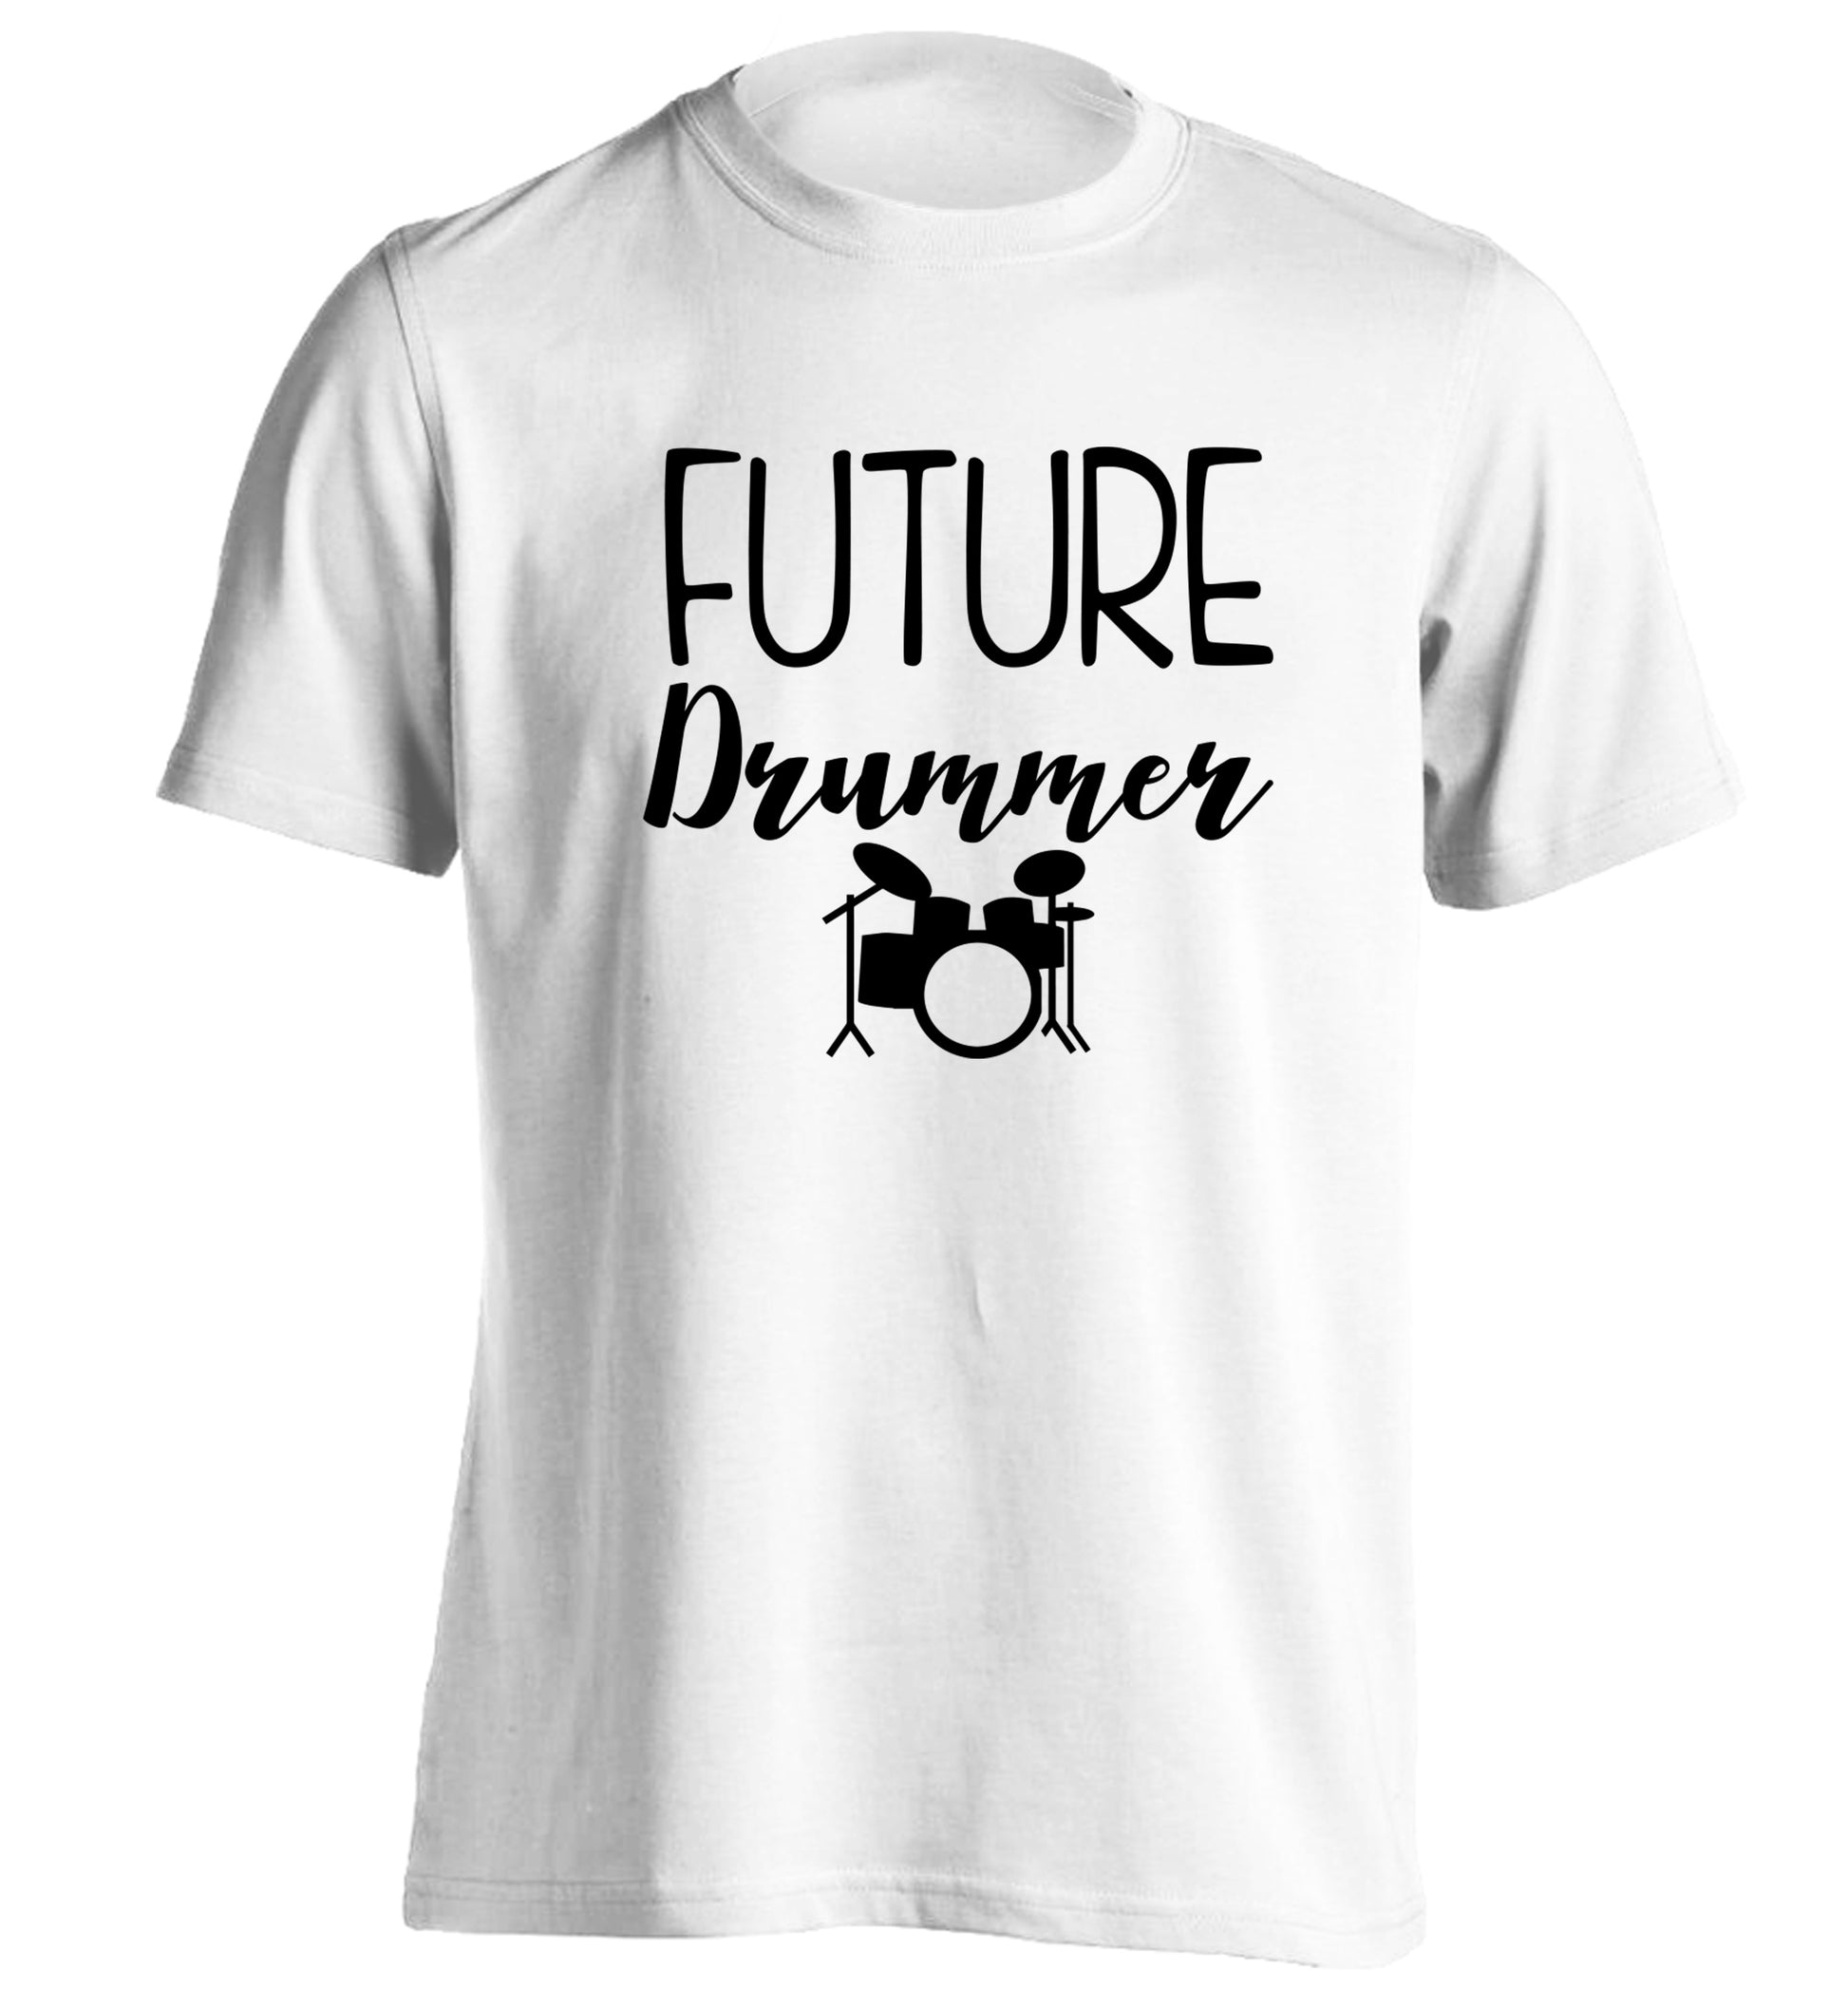 Future drummer adults unisex white Tshirt 2XL